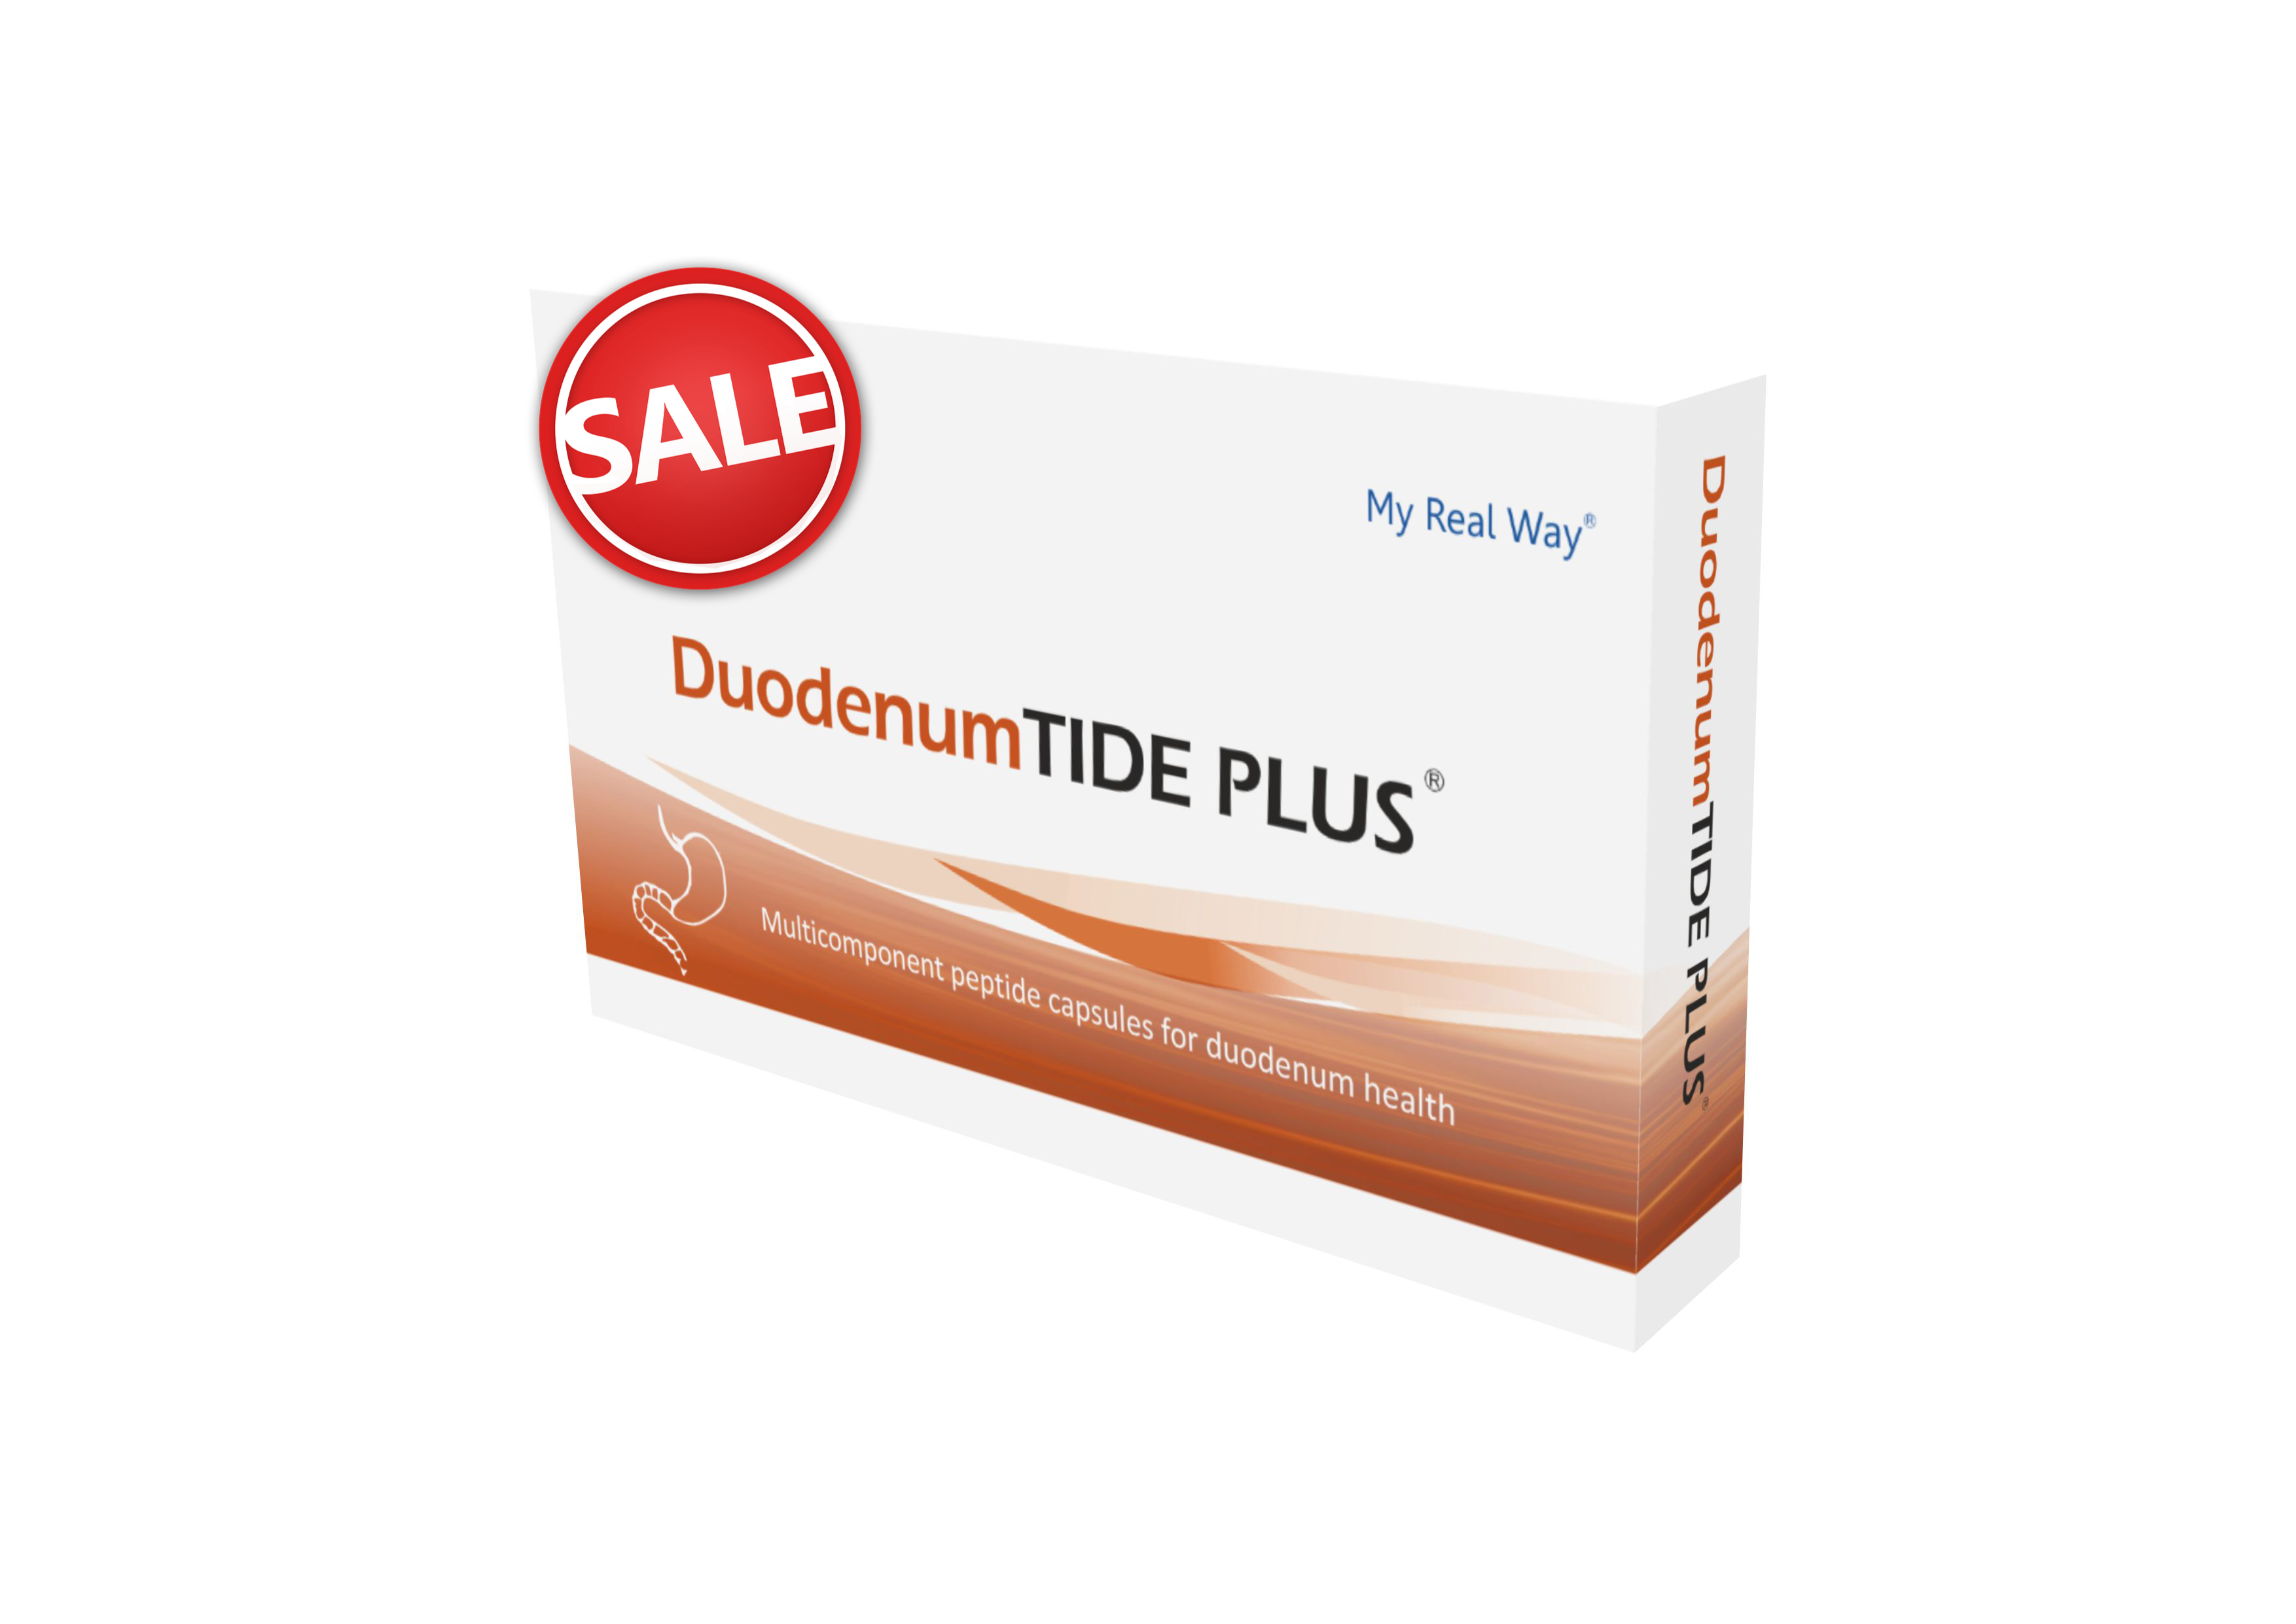 DuodenumTIDE PLUS peptides for duodenum